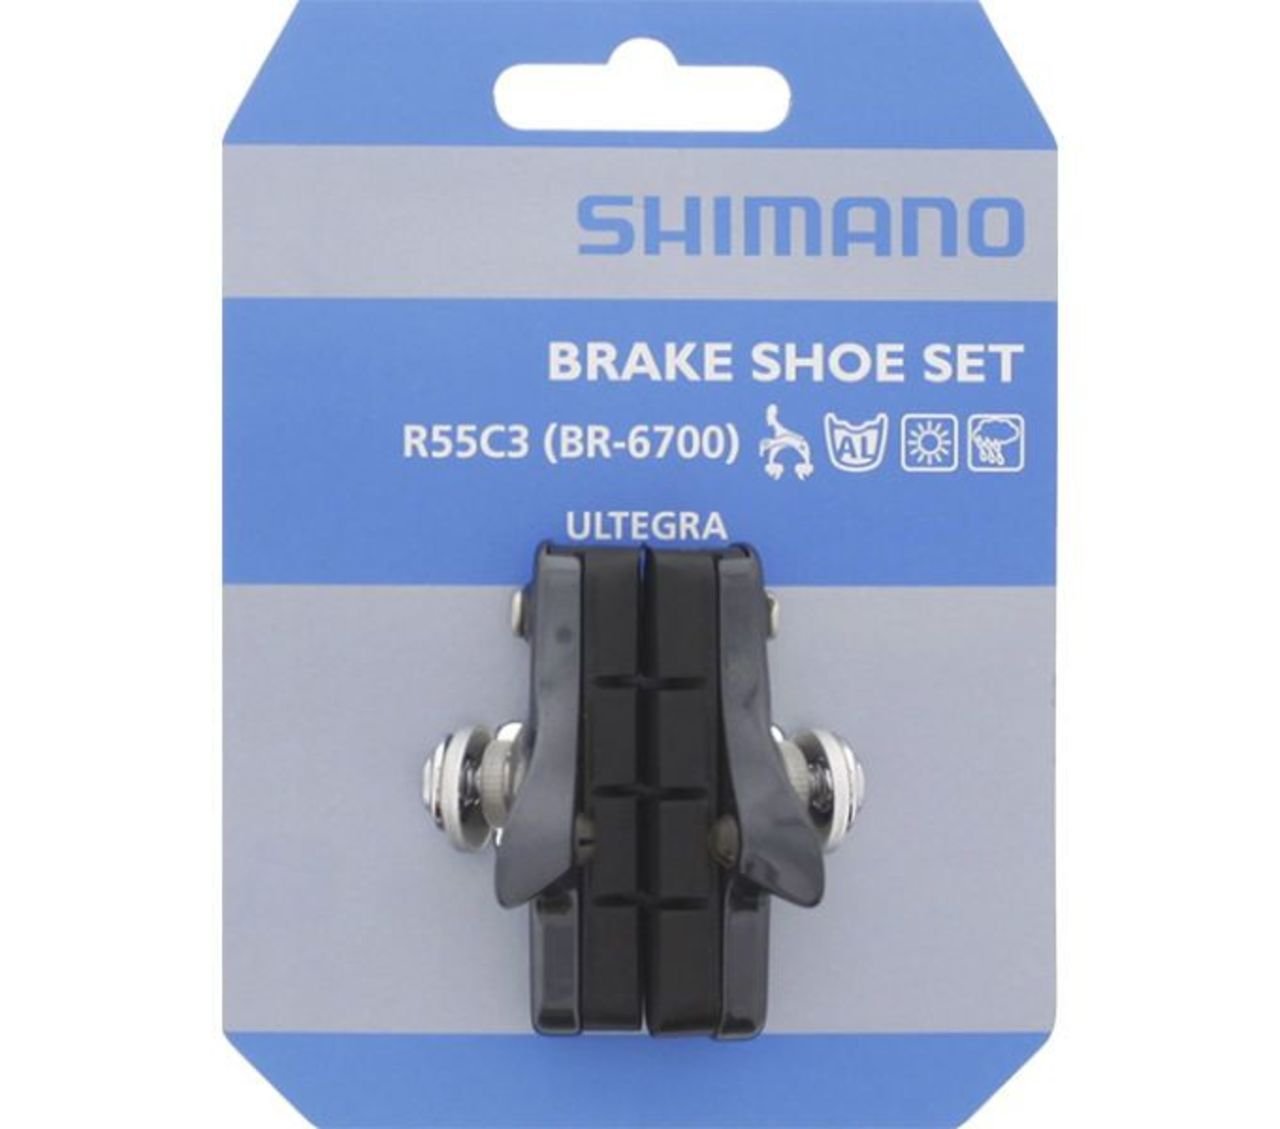 Тормозные колодки Shimano, brake pad, R55C3, Cartridge, for BR-6700, for aluminium rim, 1 pair, A154773 тормозные колодки shimano m70ct4 для v brake картридж y8a298060